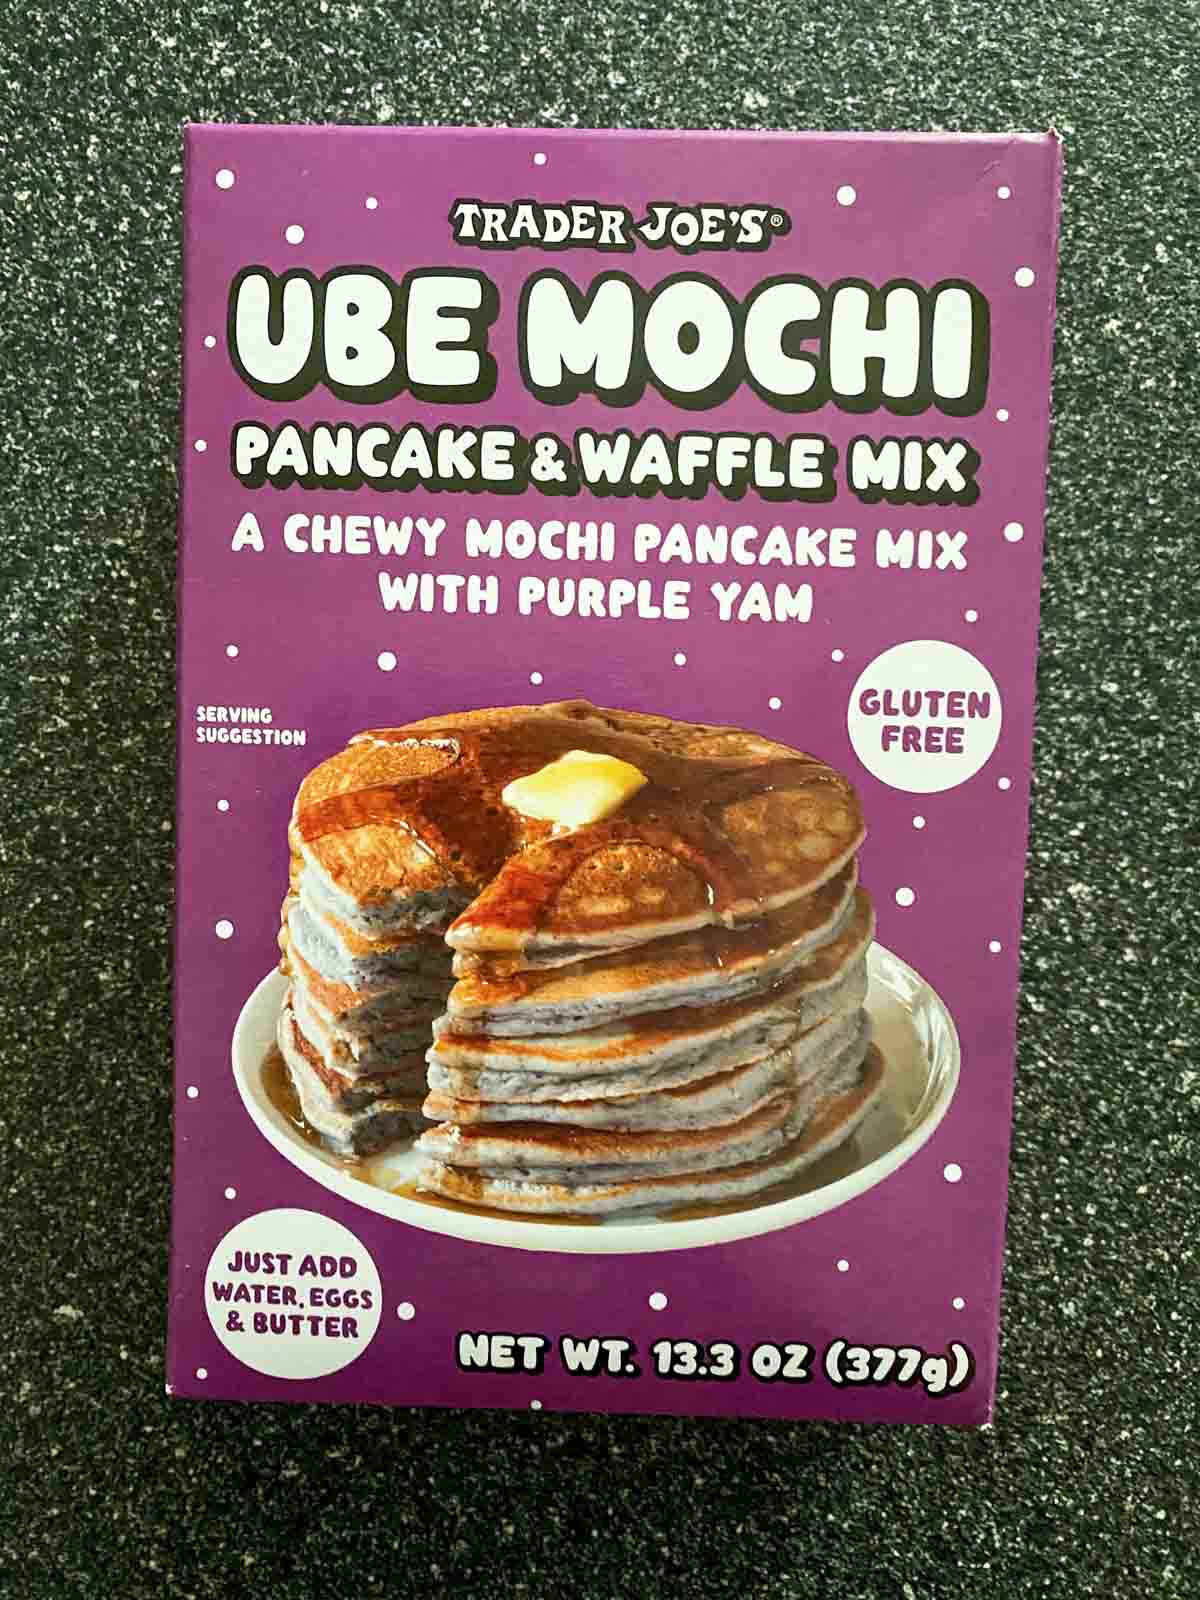 Trader Joe's Ube Mochi Pancake & Waffle Mix Trial and Eater